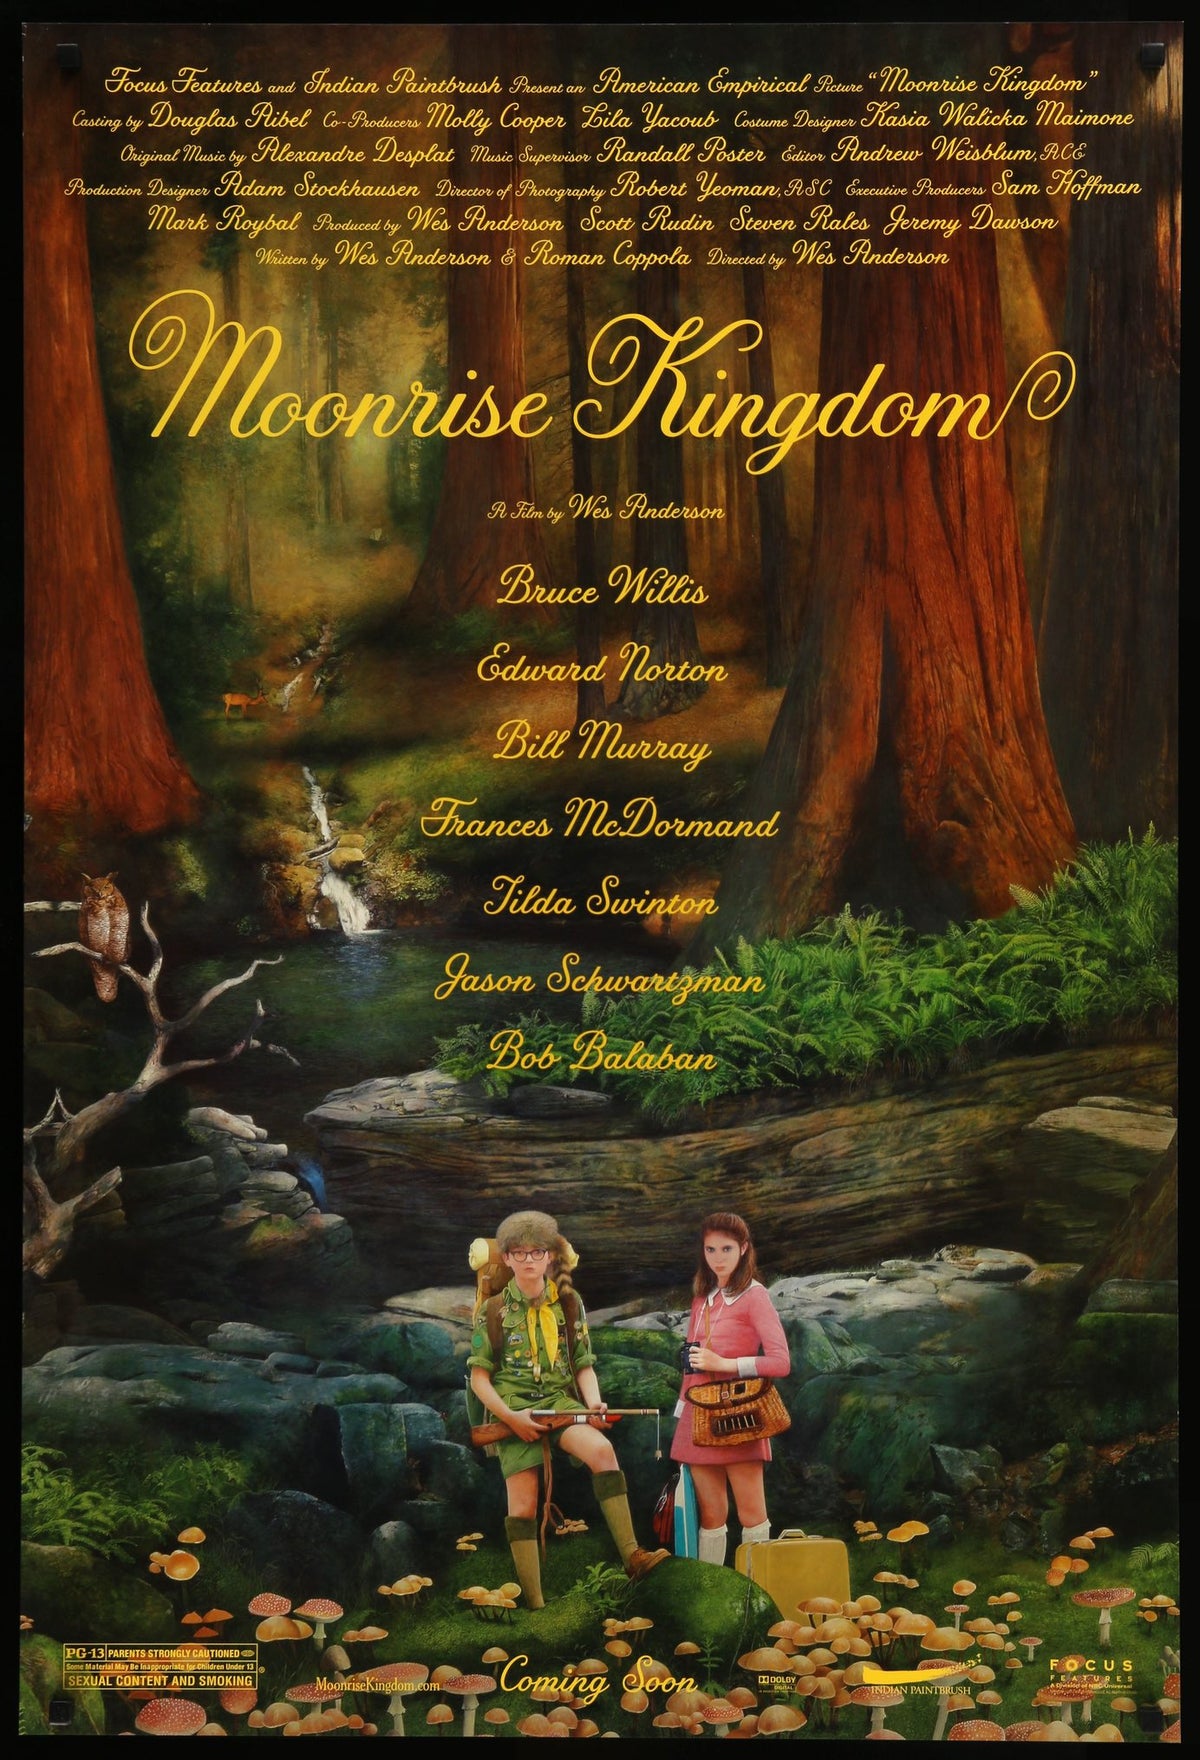 Moonrise Kingdom (2012) original movie poster for sale at Original Film Art